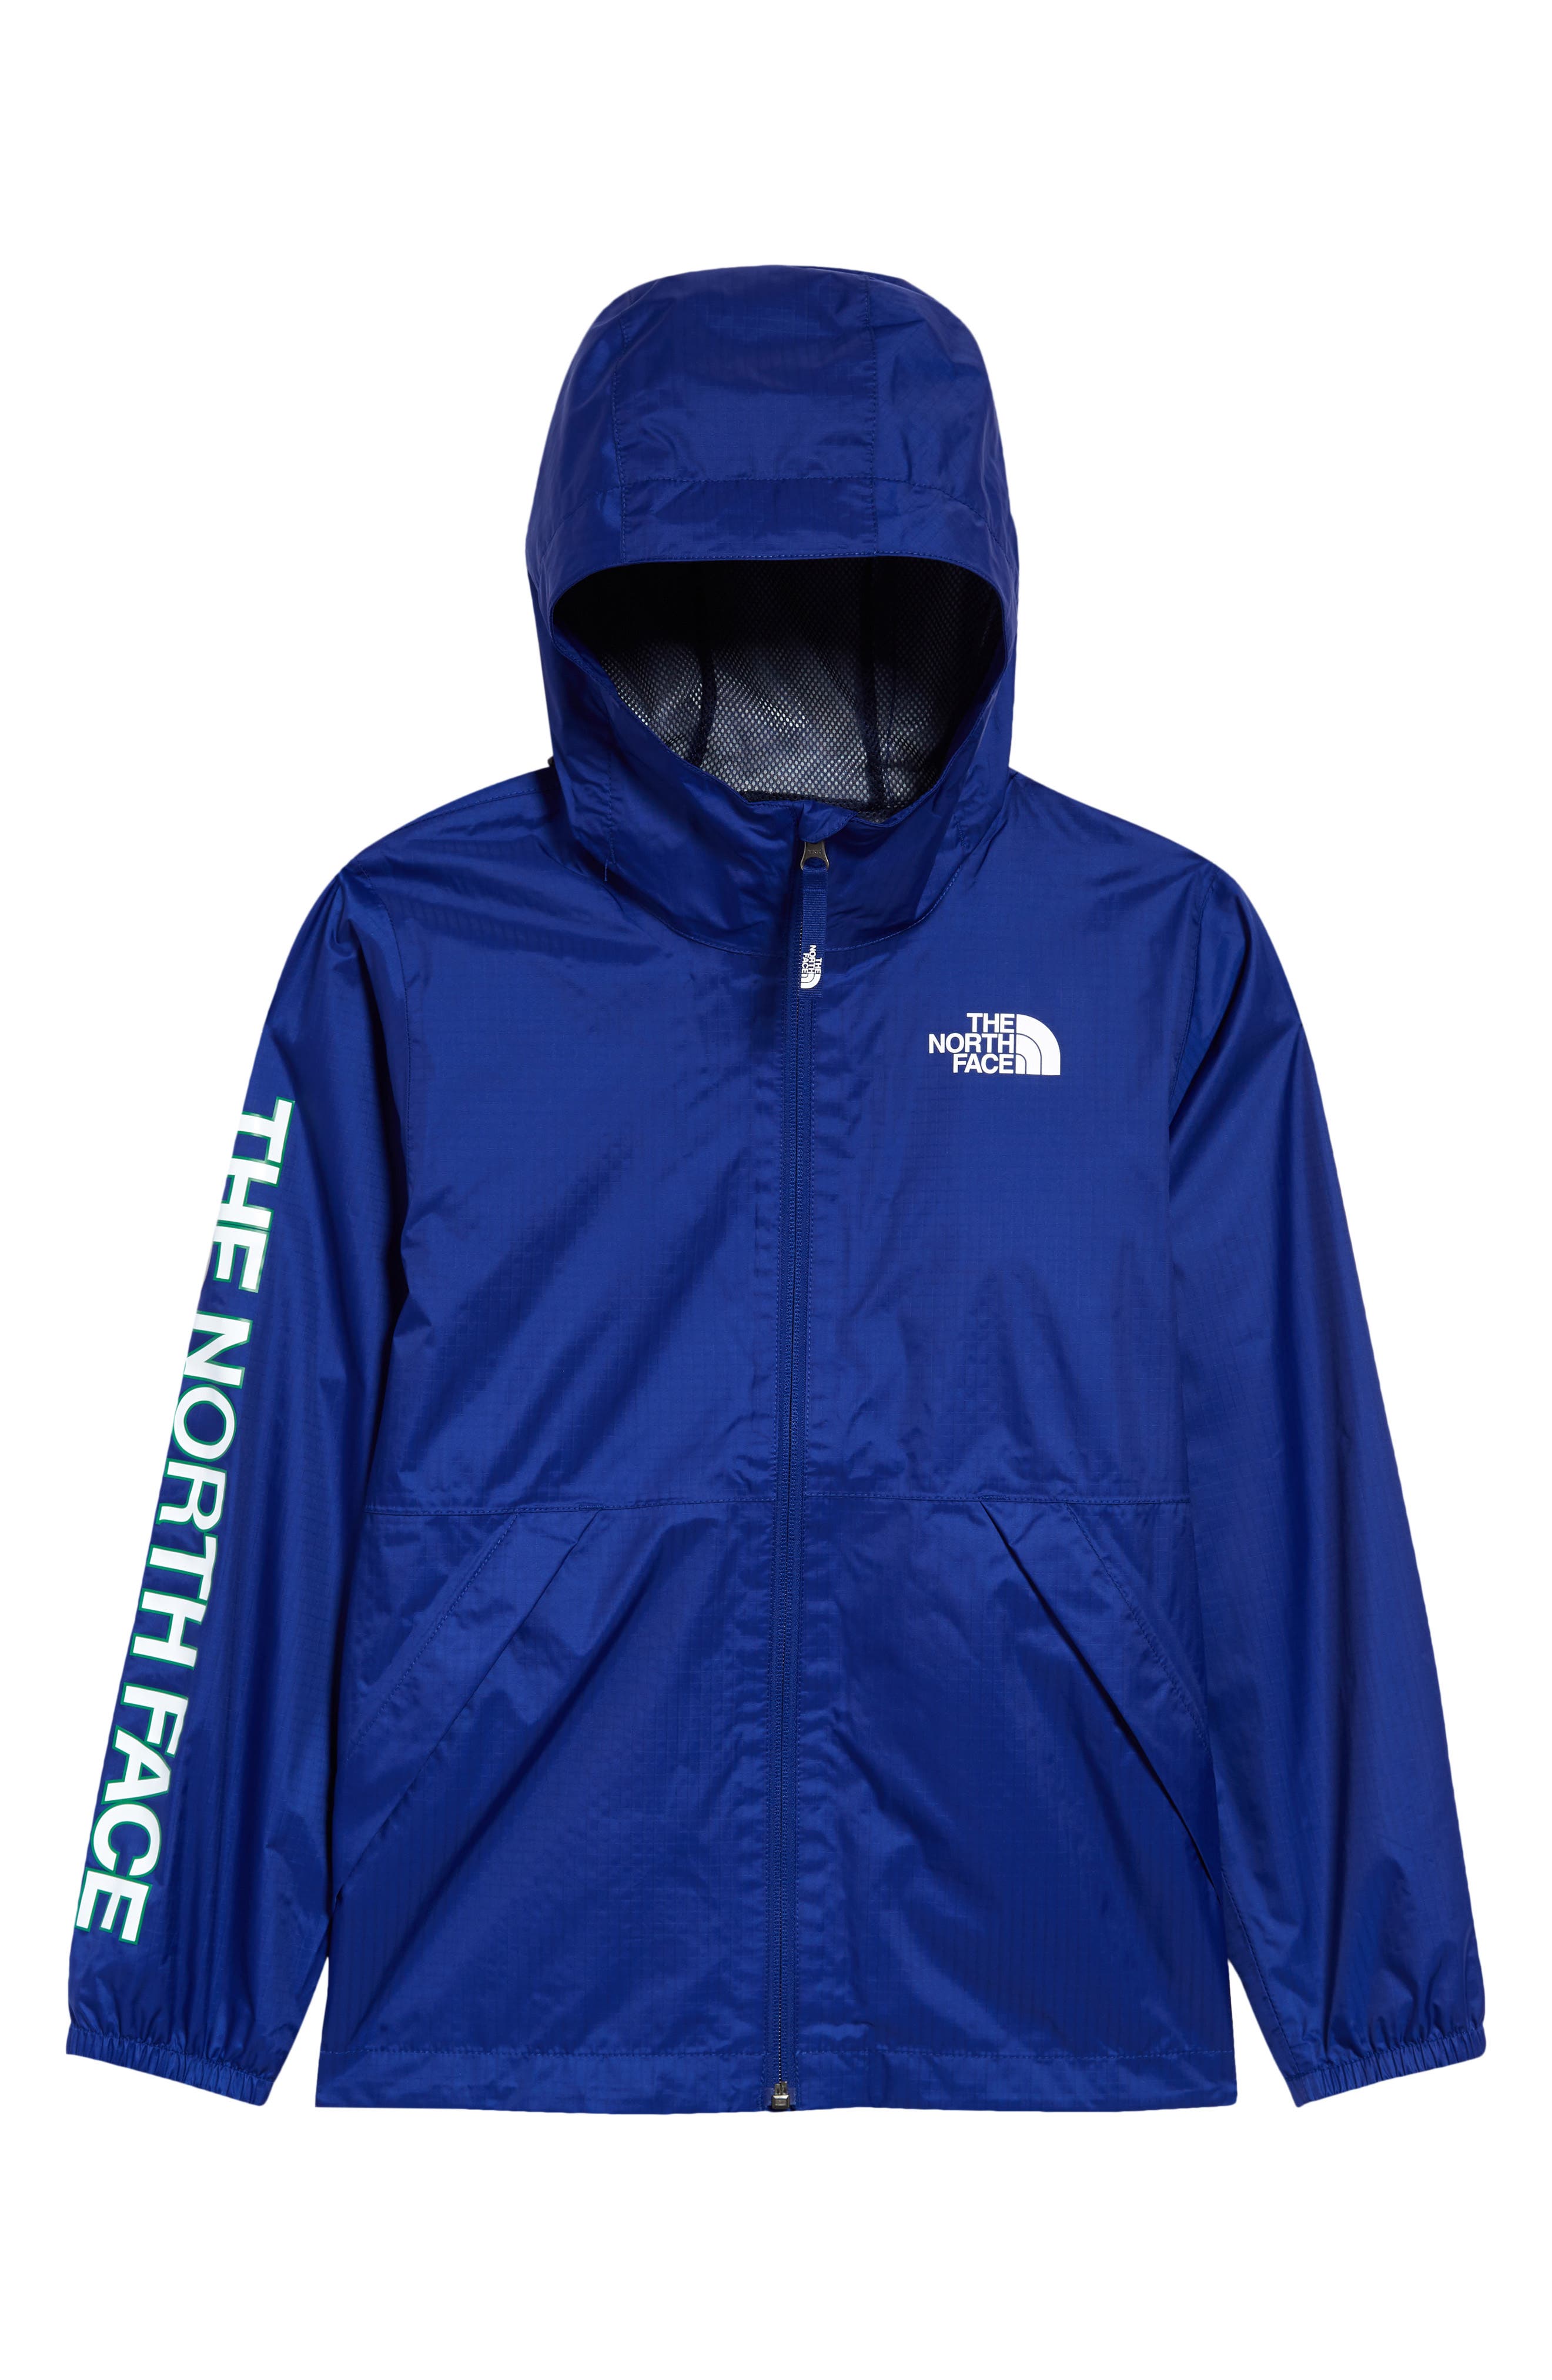 north face rain jacket | Nordstrom